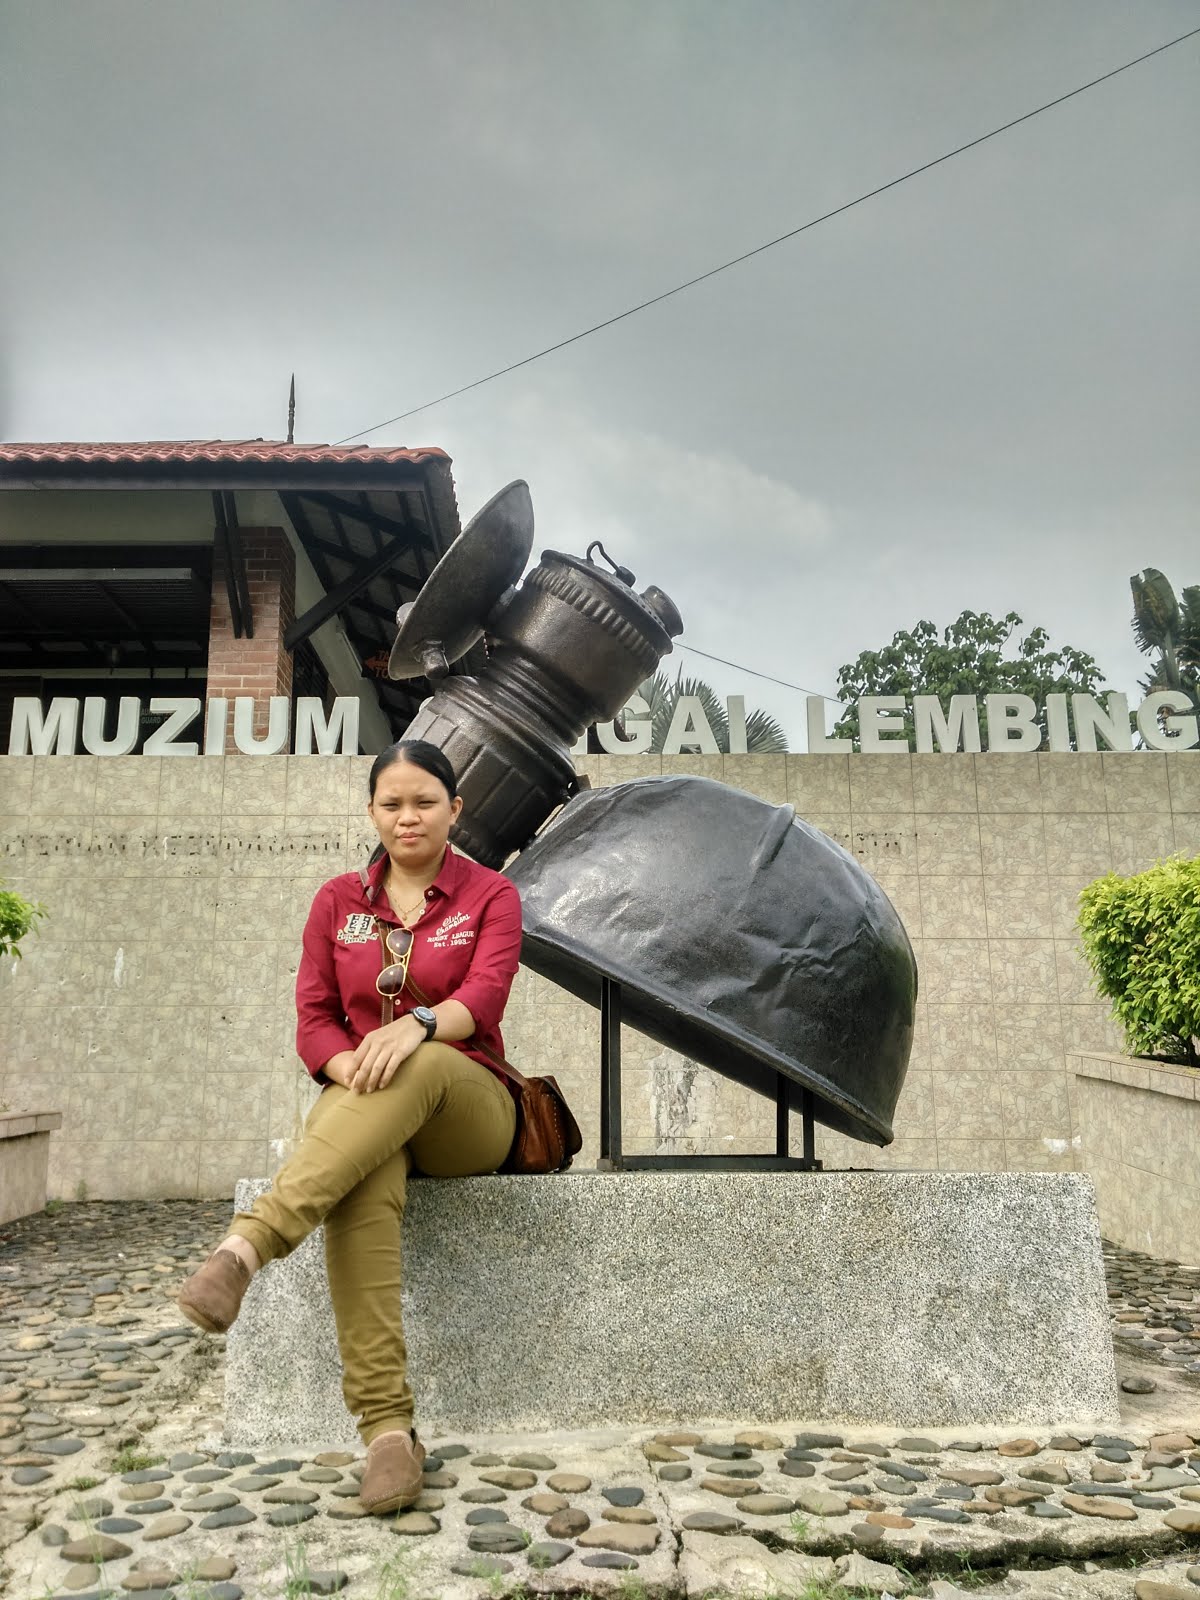 Muzium Sg Lembing @ Pahang